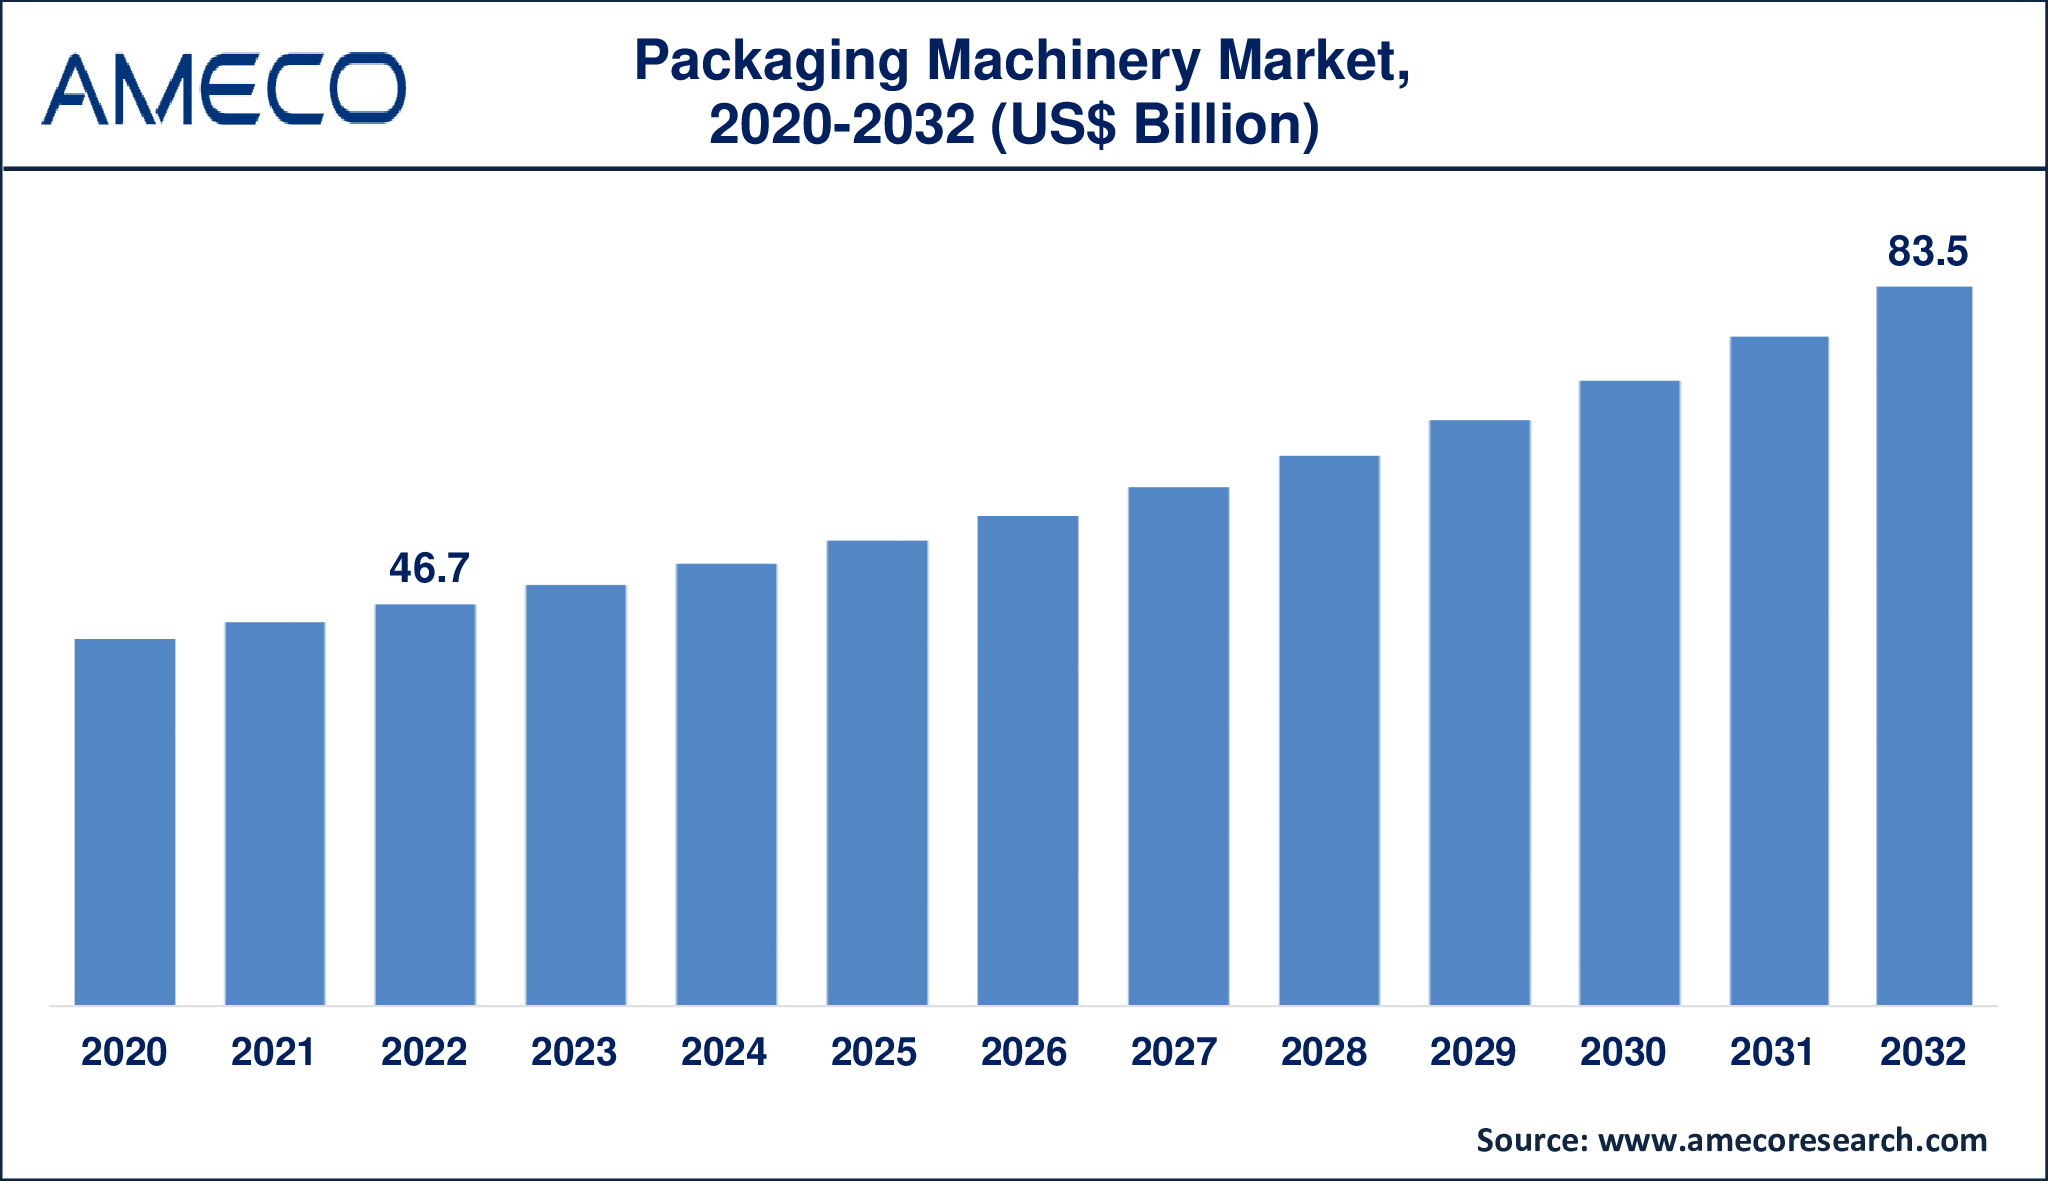 Packaging Machinery Market Dynamics